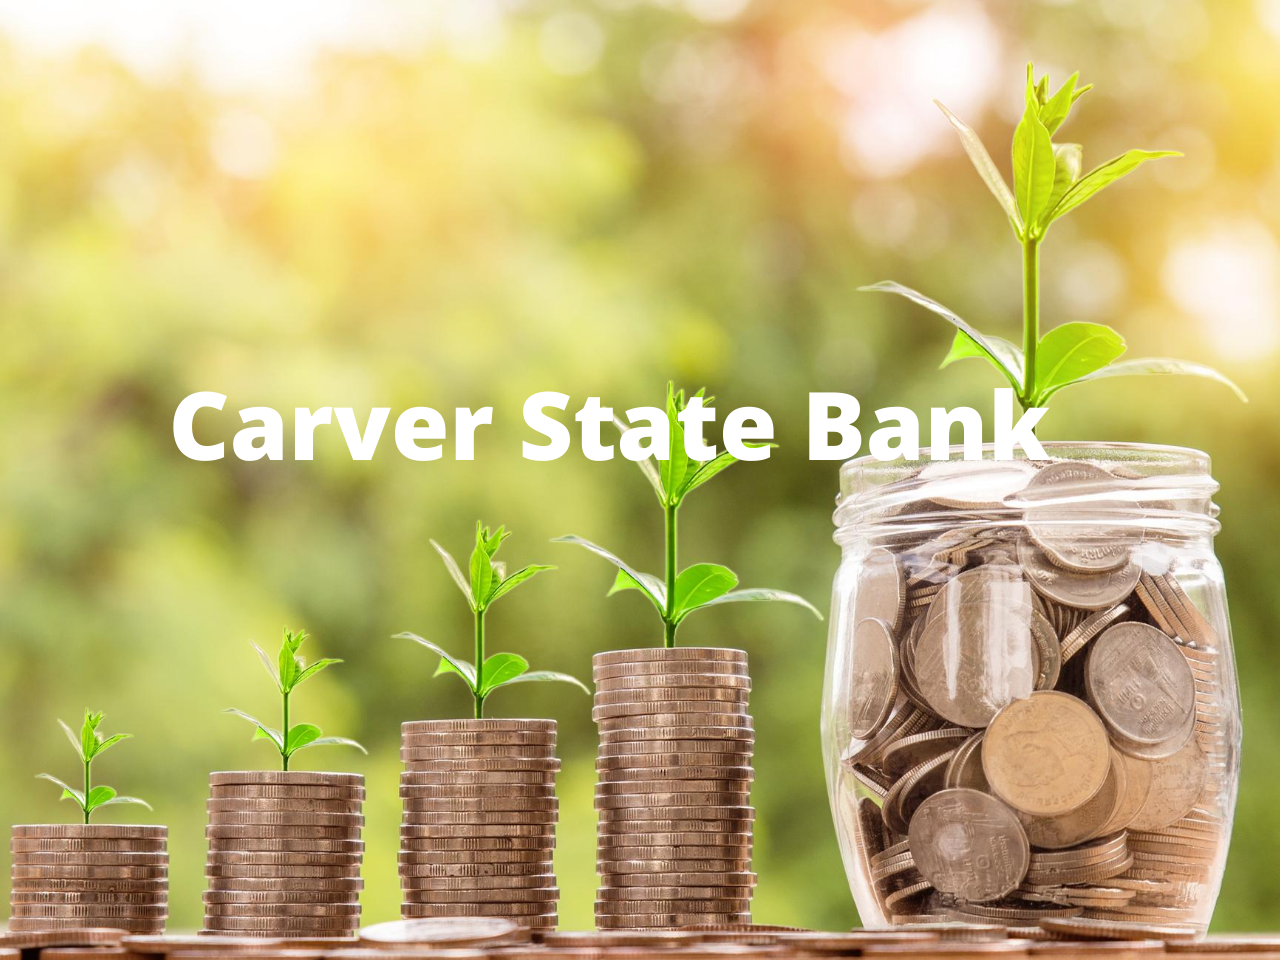 Carver State Bank of Savannah